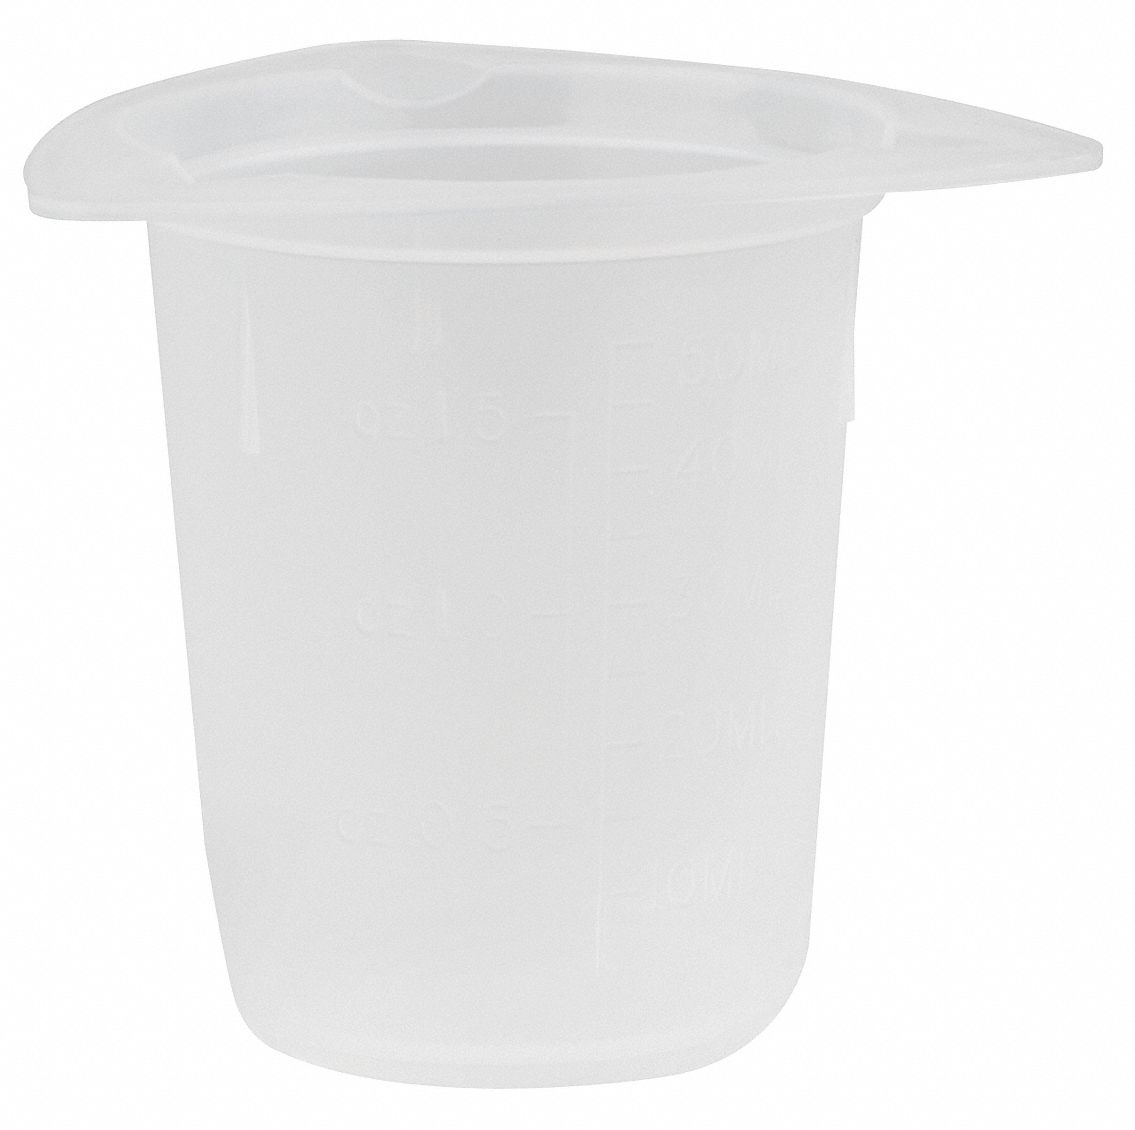 Disposable Beaker: Polypropylene, 32 oz Labware Capacity - English, Disposable, 100 PK